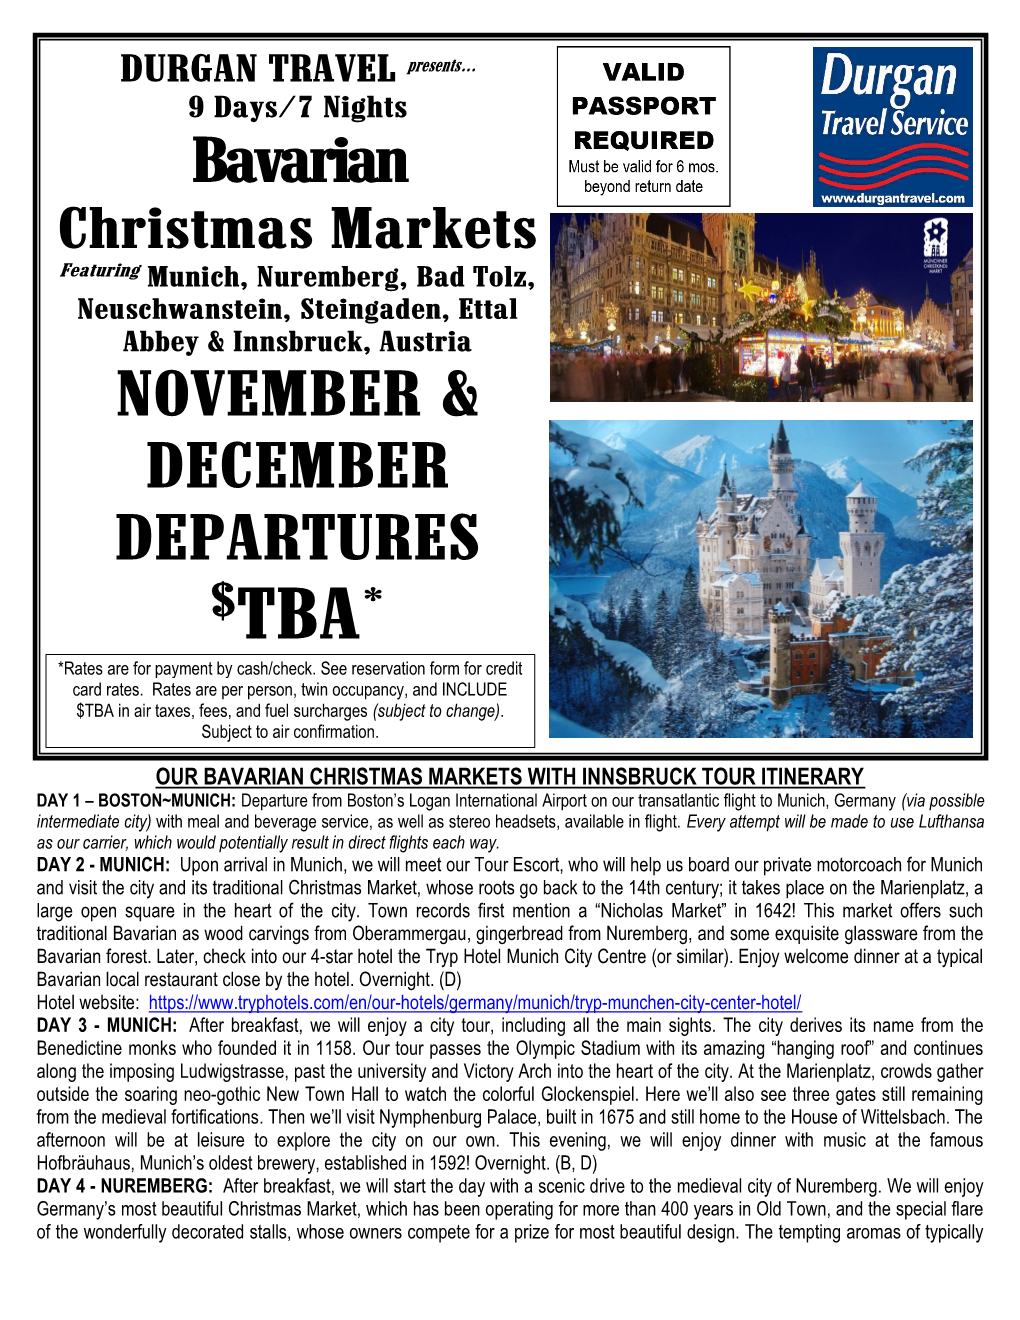 Bavarian Christmas Markets with Innsbruck